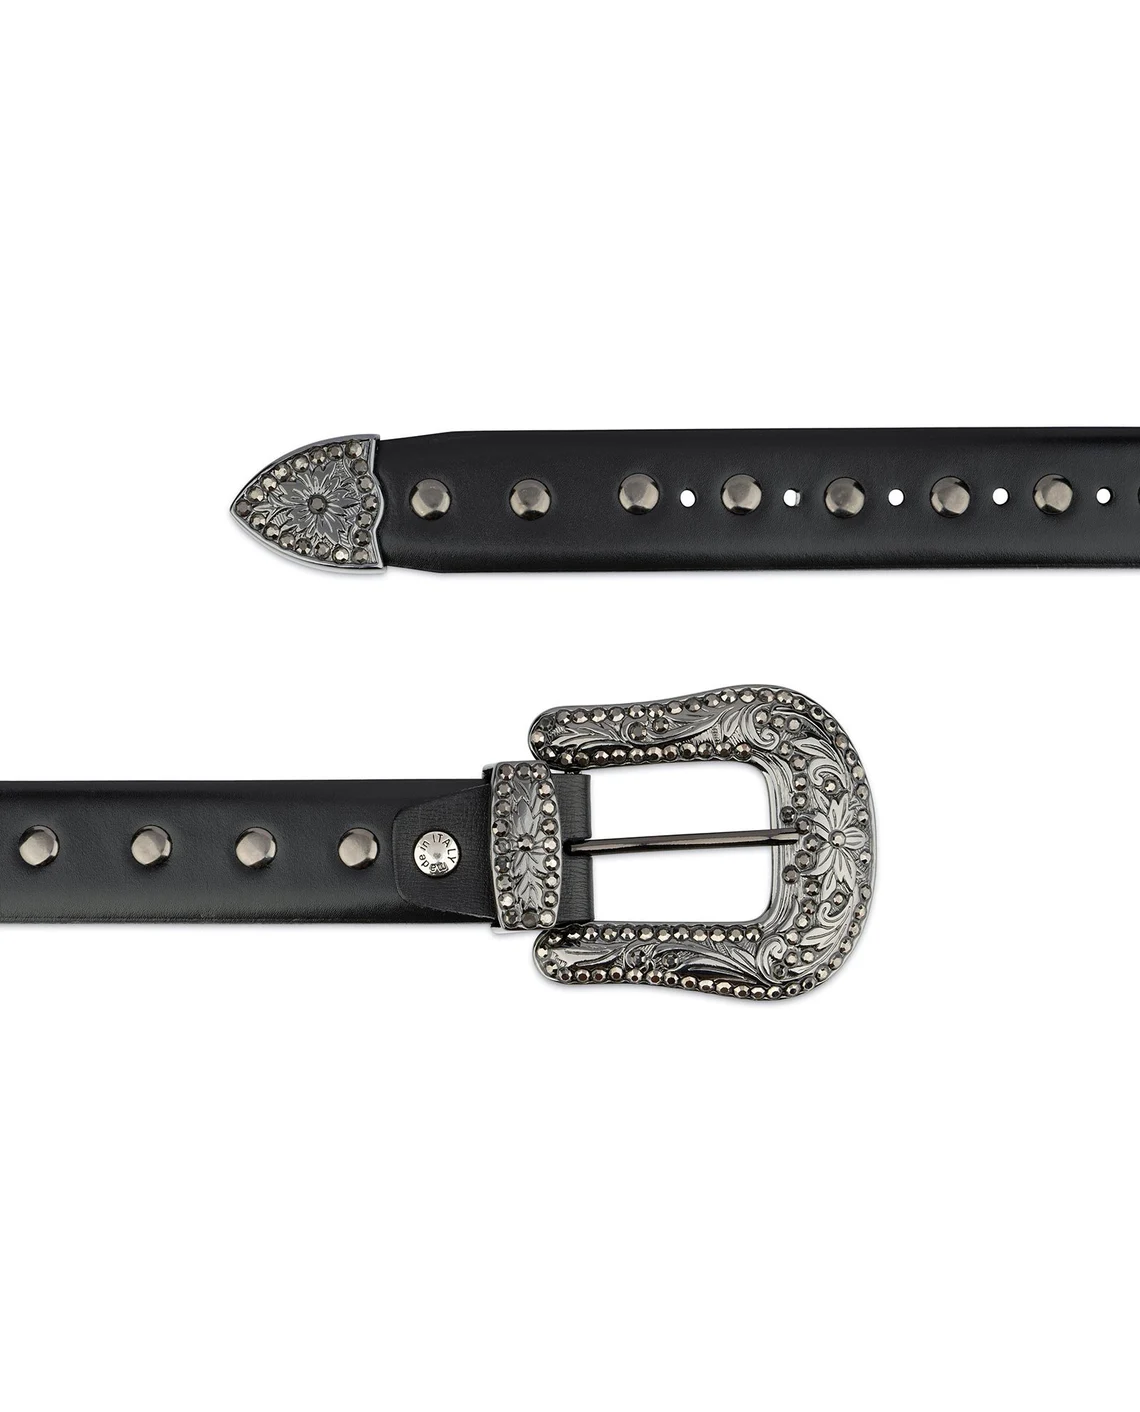 Silver Studded Belt, Black Stones Belt, Western Buckle Belt